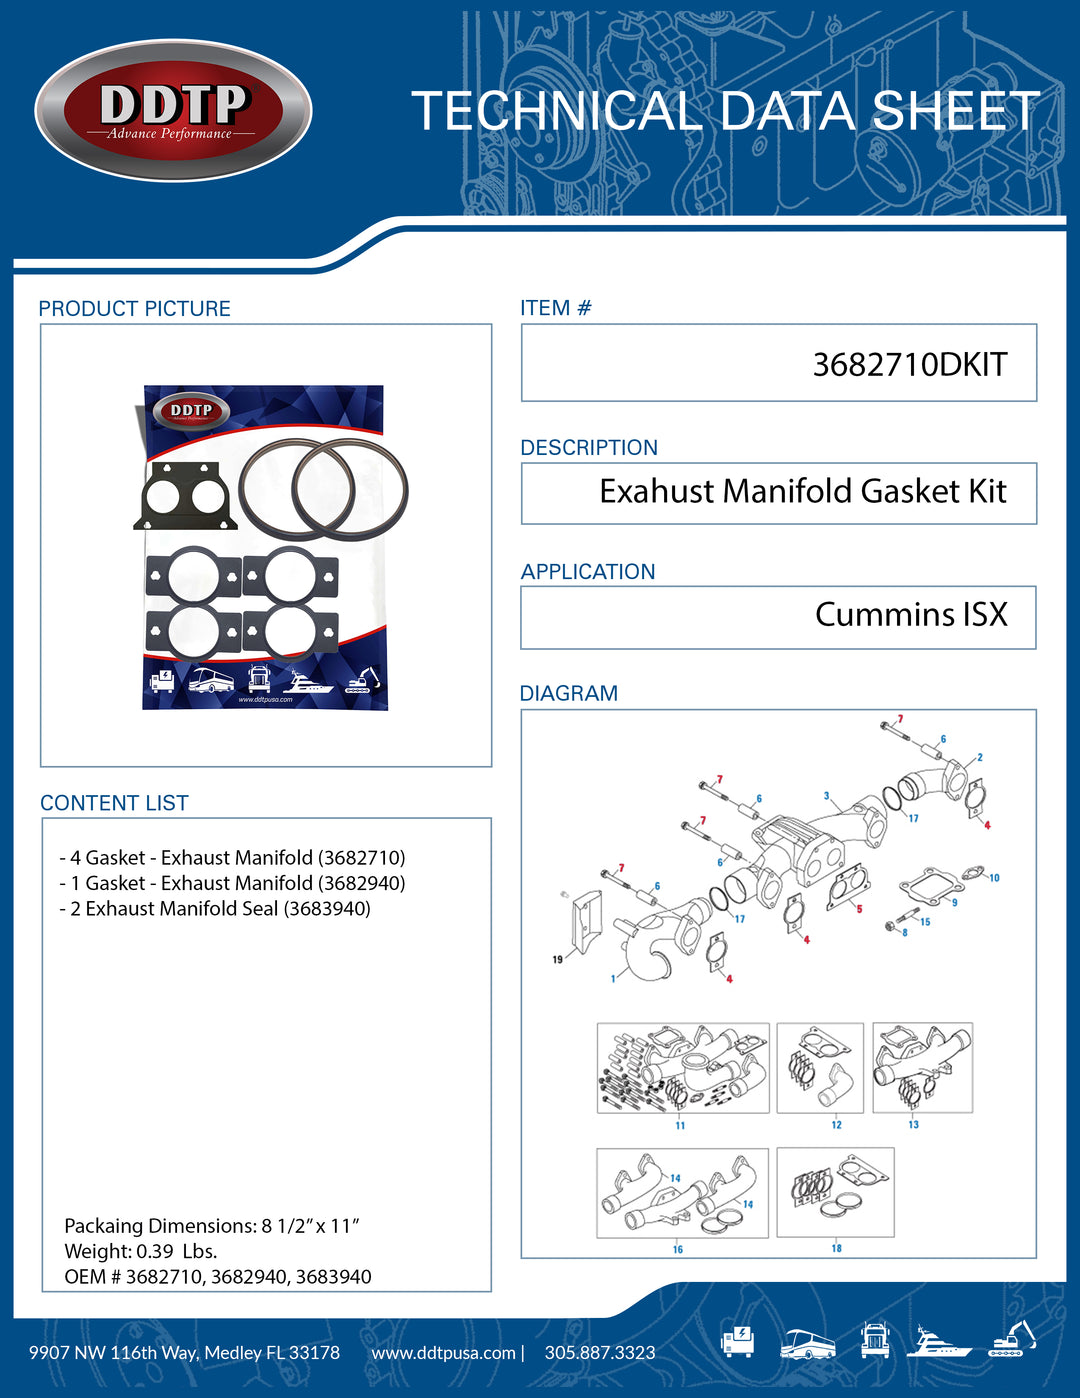 Exahust Manifold Gasket Kit Cummins ISX (3682710)